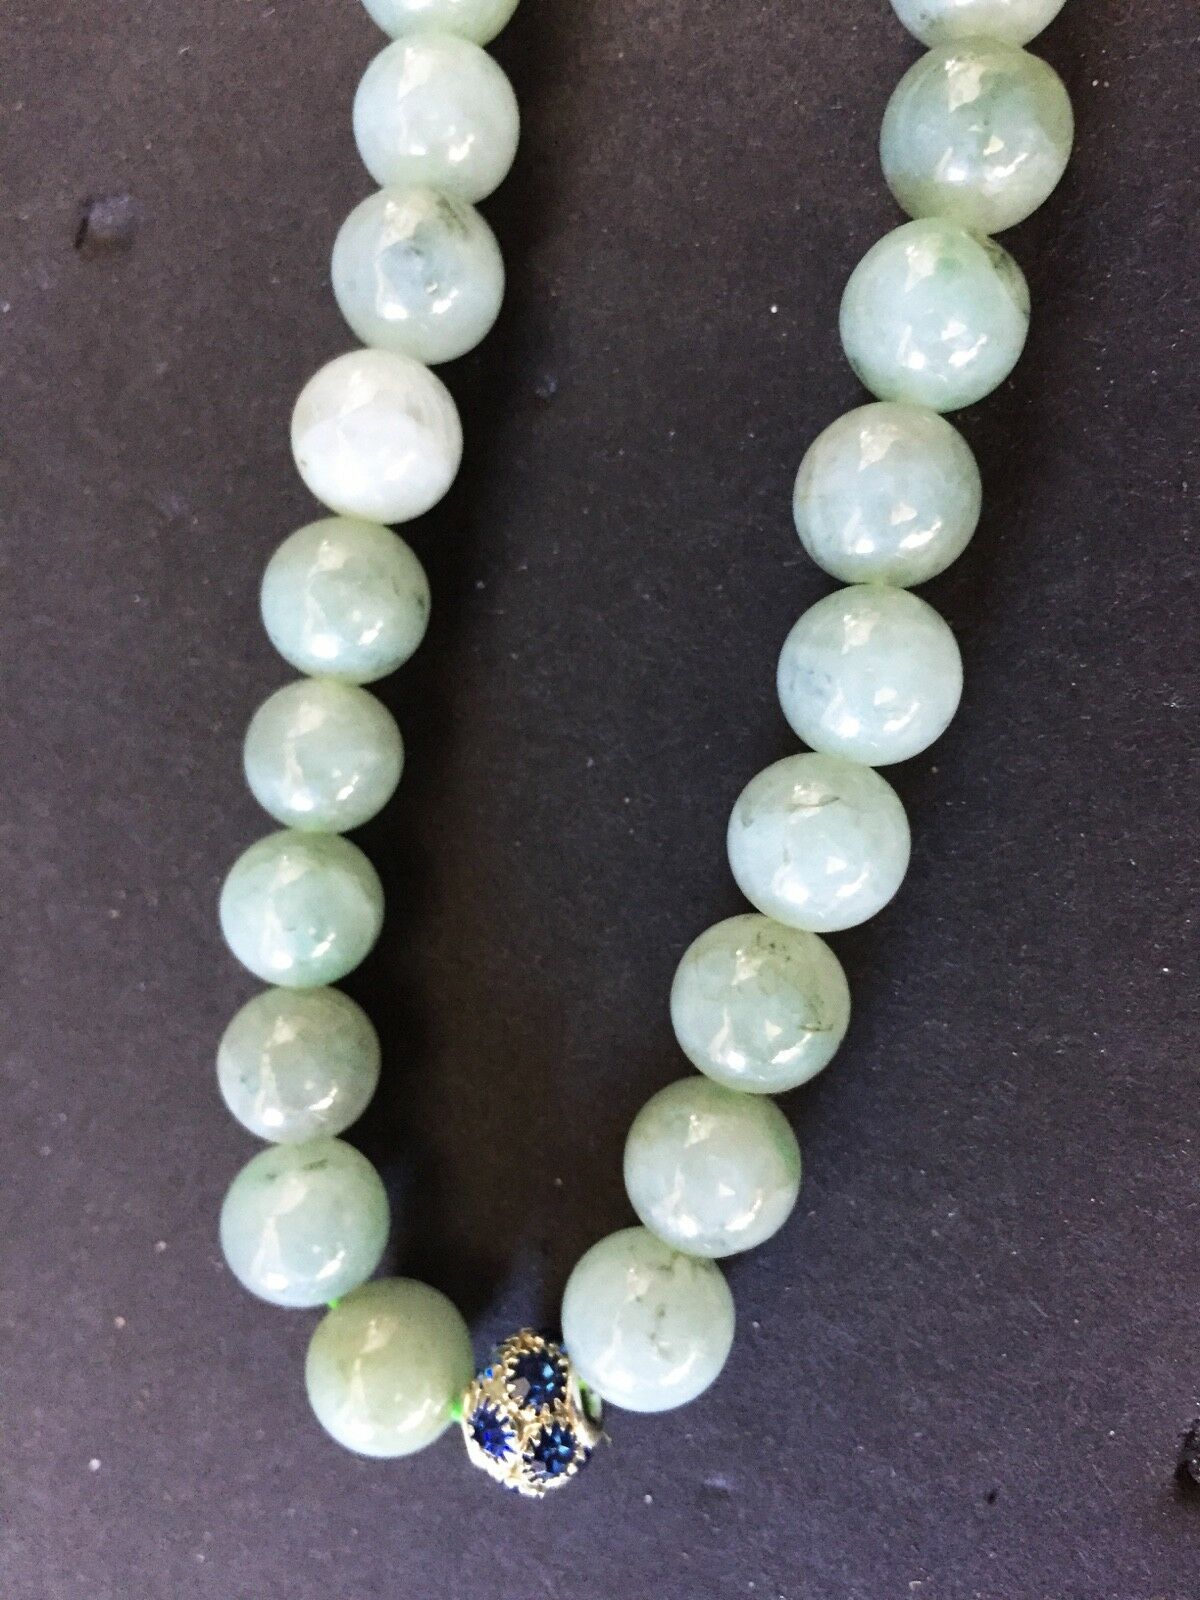 #1687 Superb  Jadeite Jade  Necklace 68 beads